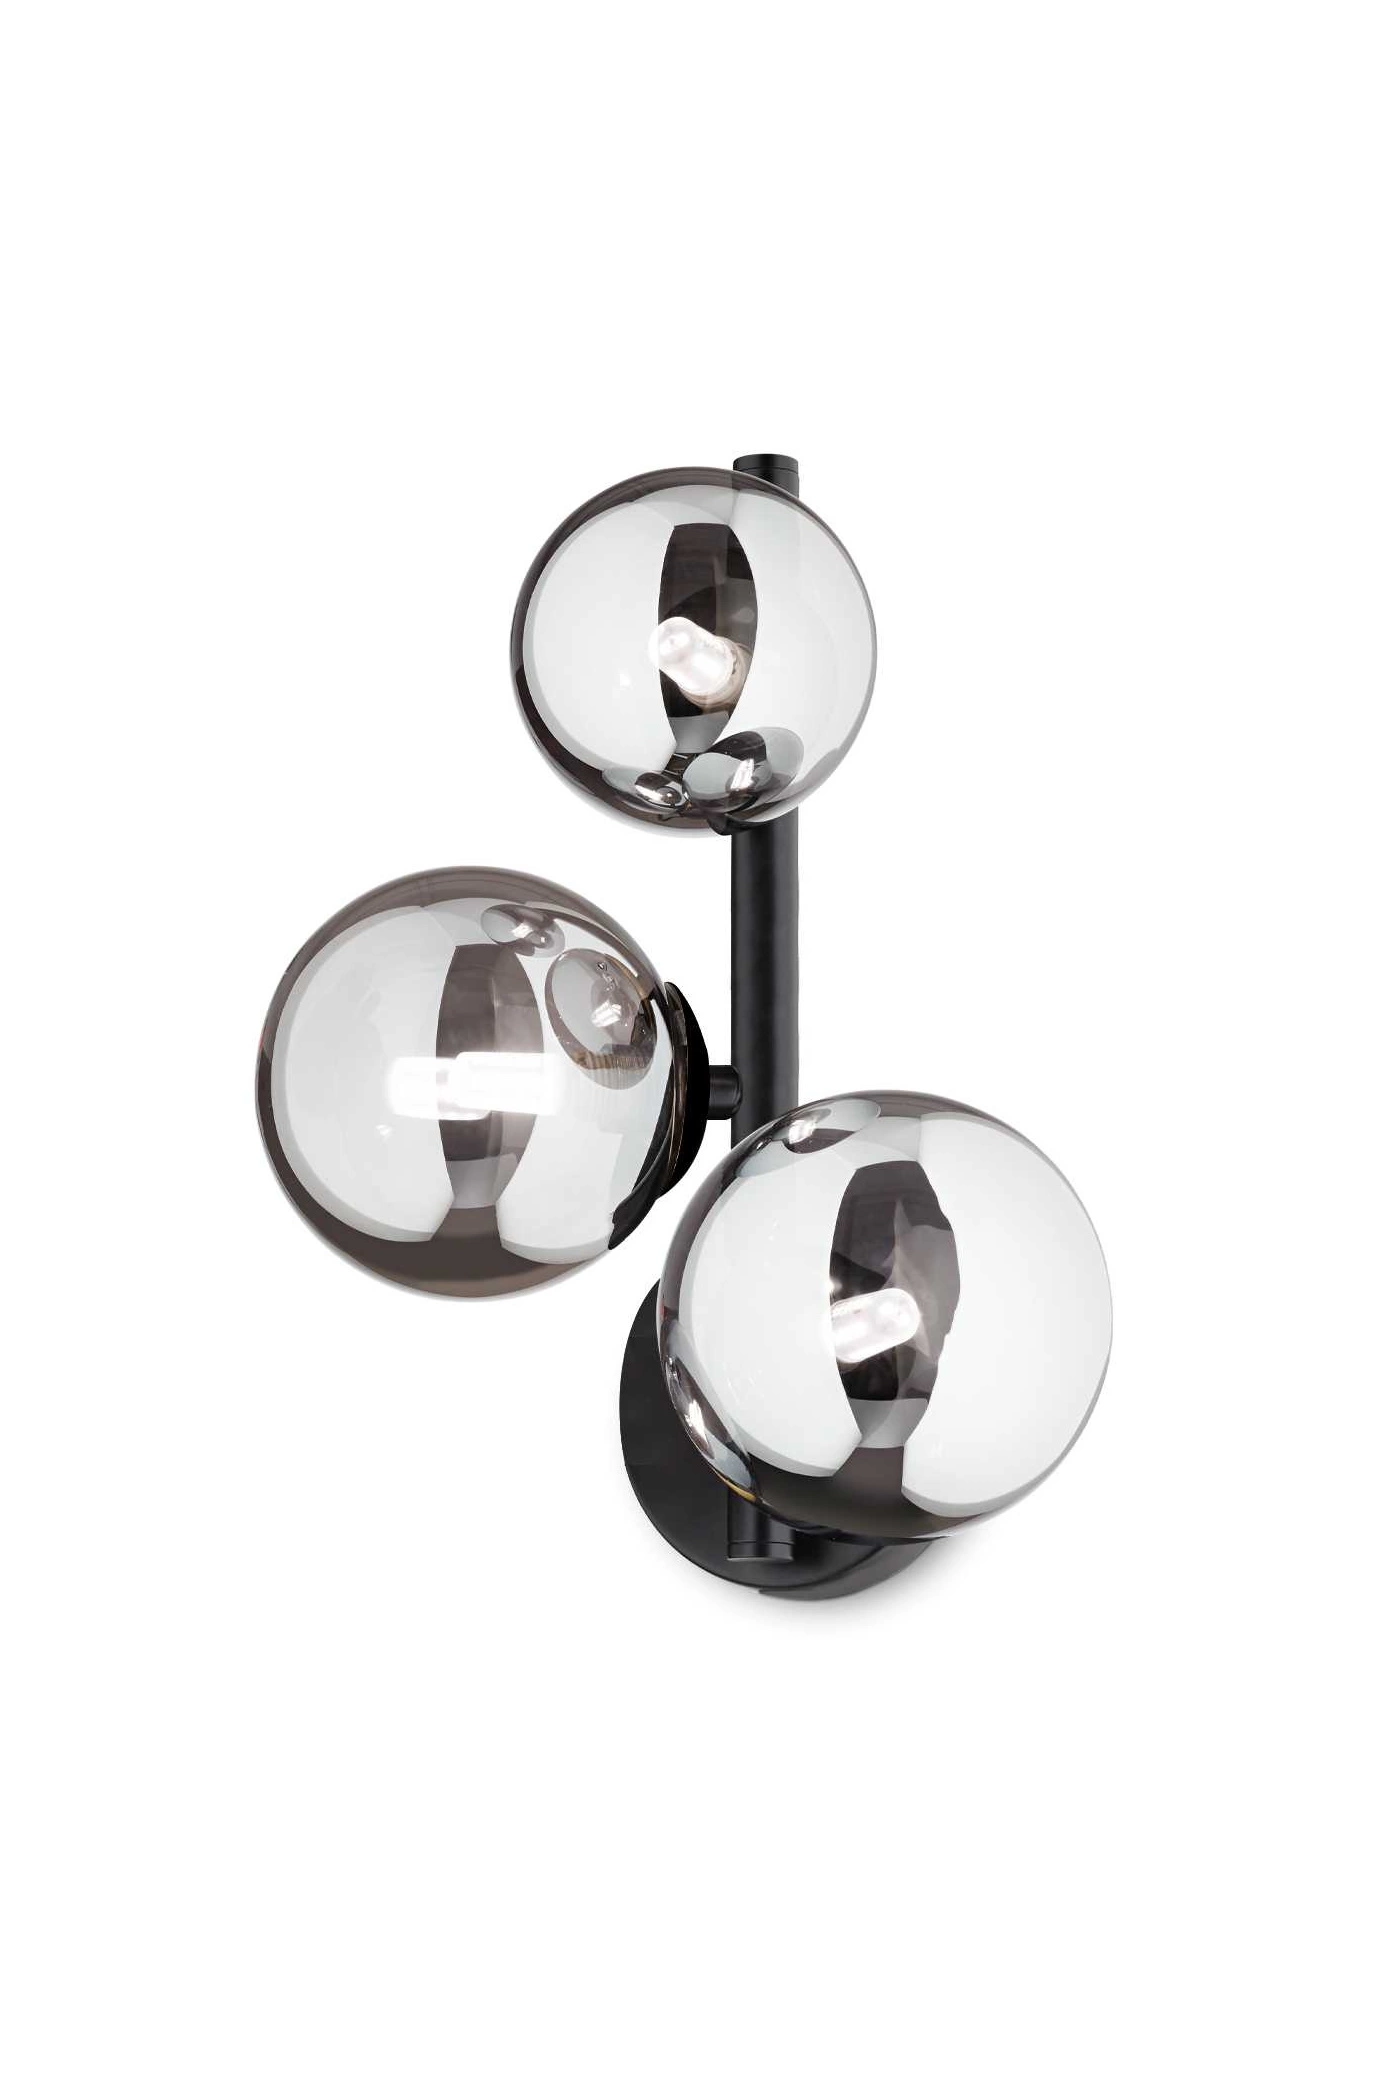   
                        
                        Бра IDEAL LUX (Италия) 10398    
                         в стиле Хай-тек.  
                        Тип источника света: светодиодная лампа, сменная.                                                 Цвета плафонов и подвесок: Серый.                         Материал: Стекло.                          фото 1